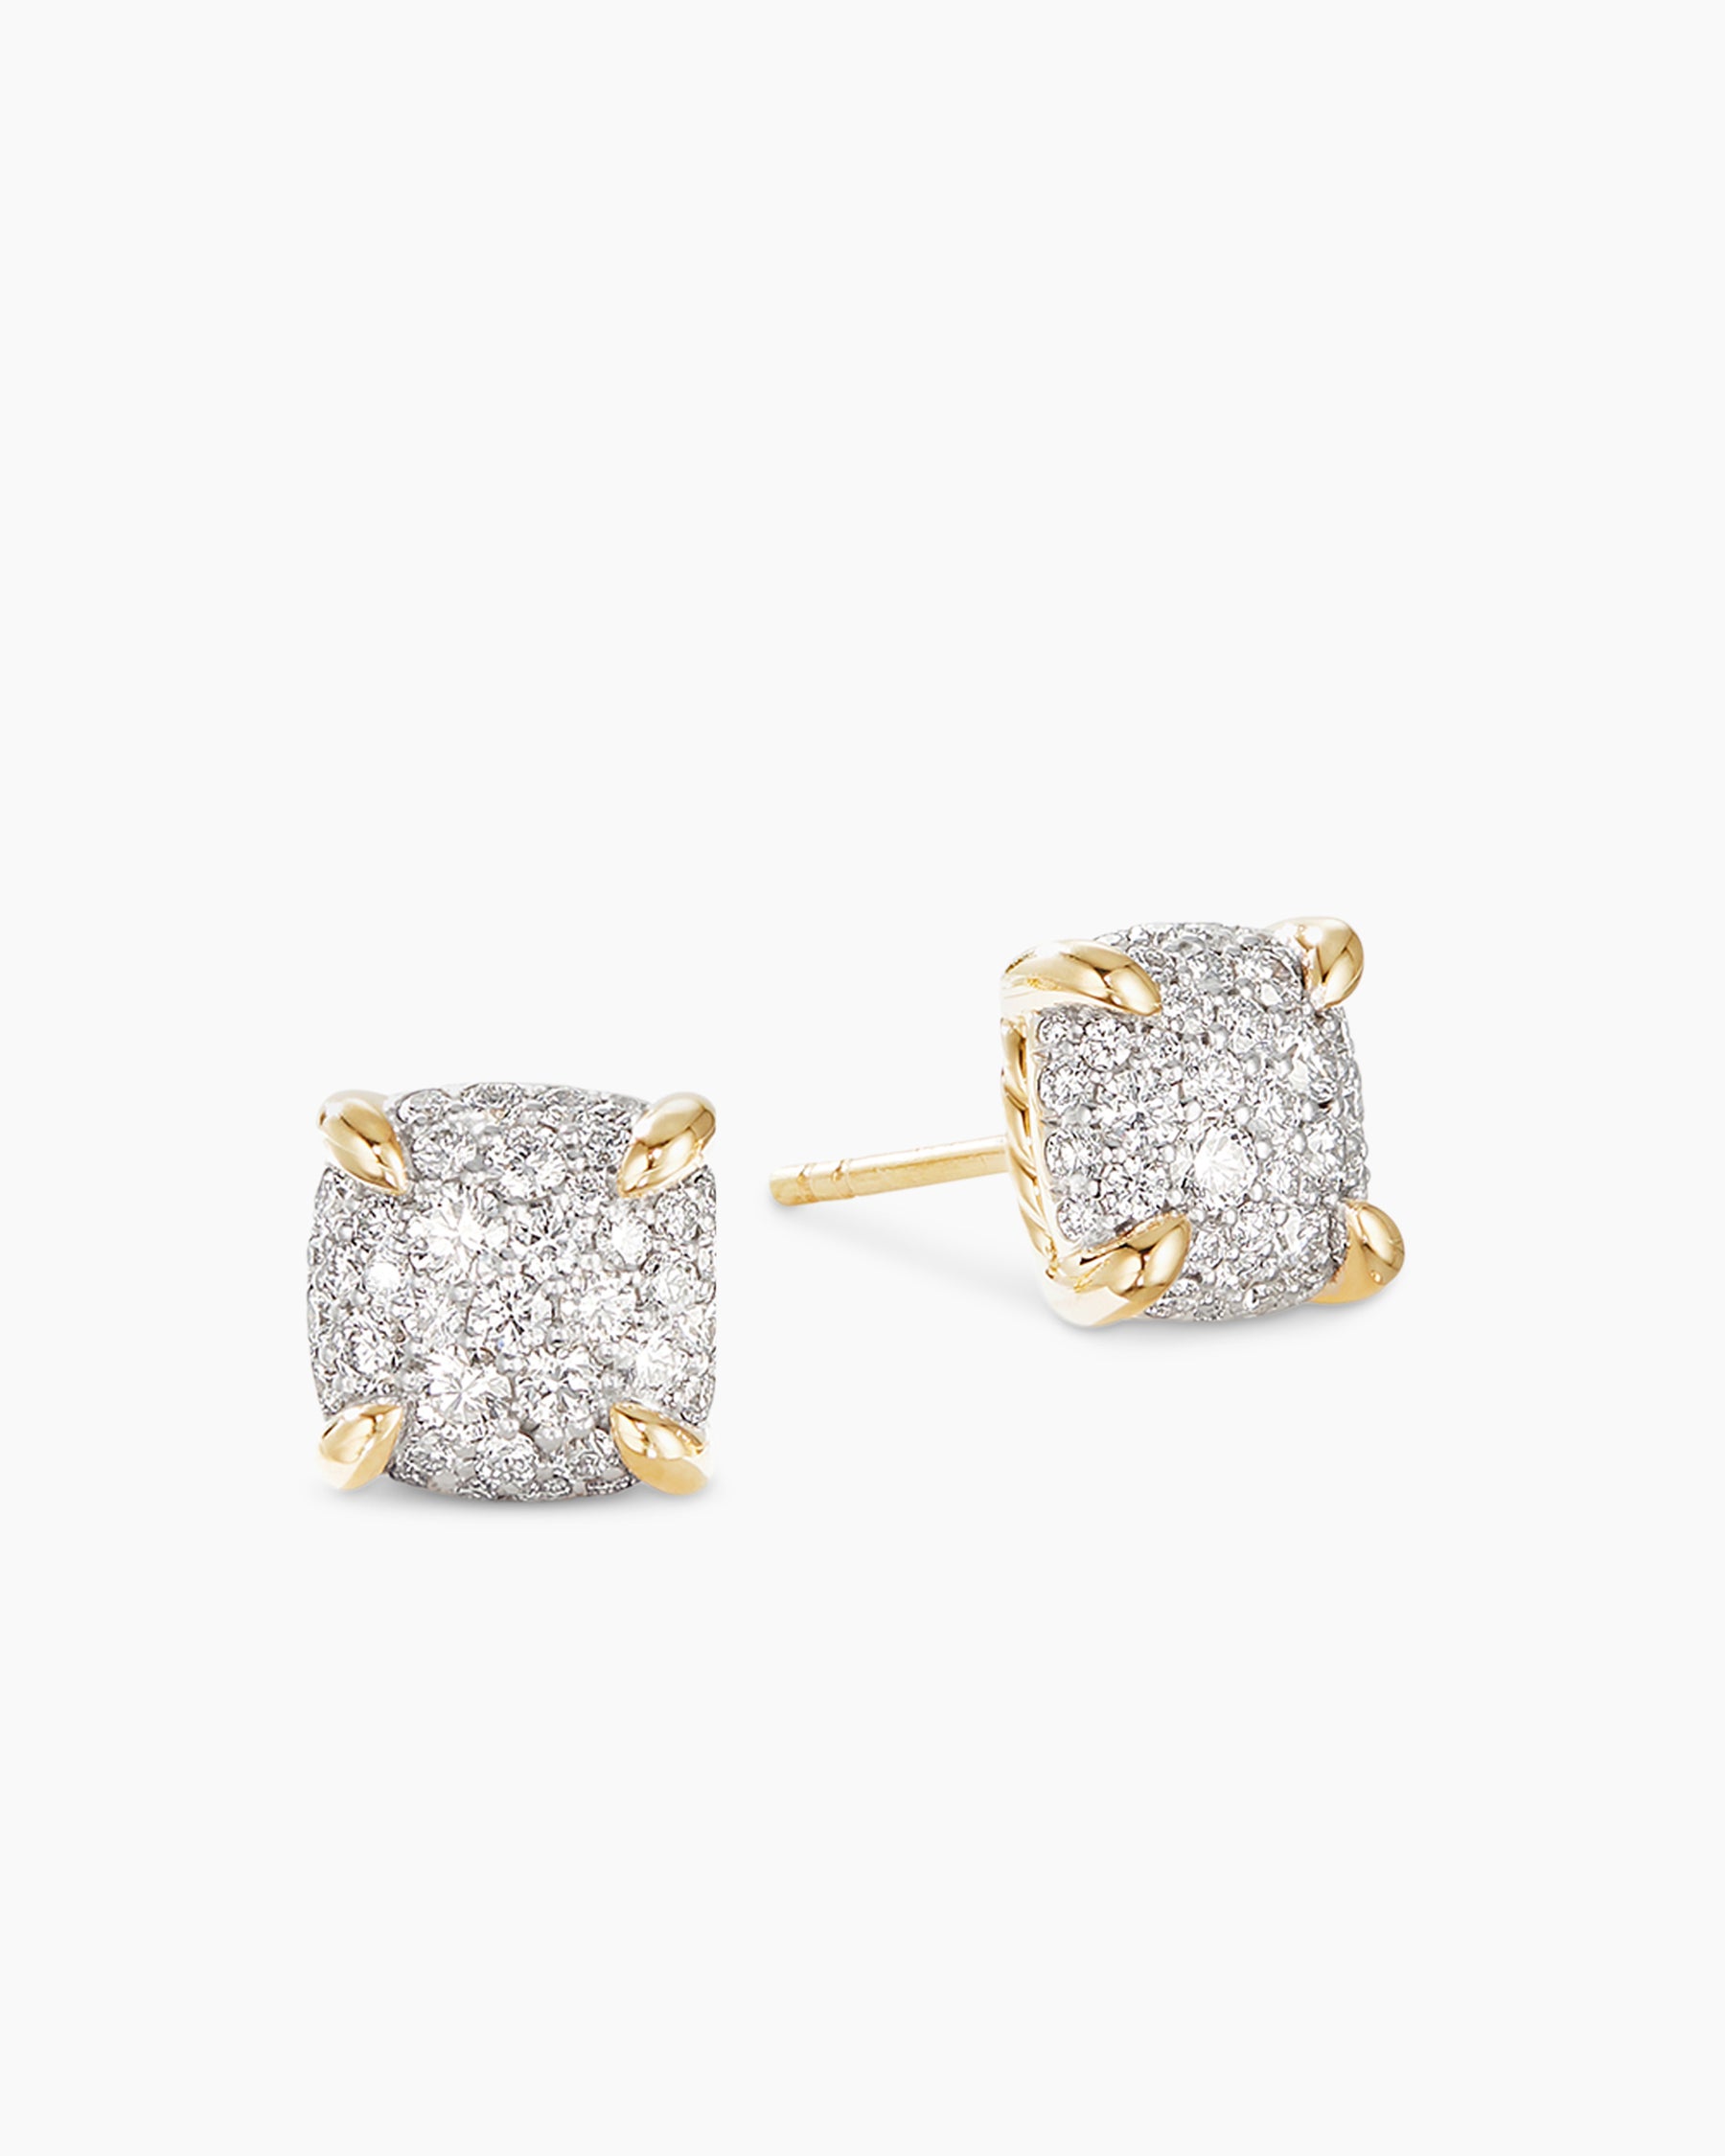 David Yurman Pearl and Pavé Drop Earrings in 18K Yellow Gold with Diamonds